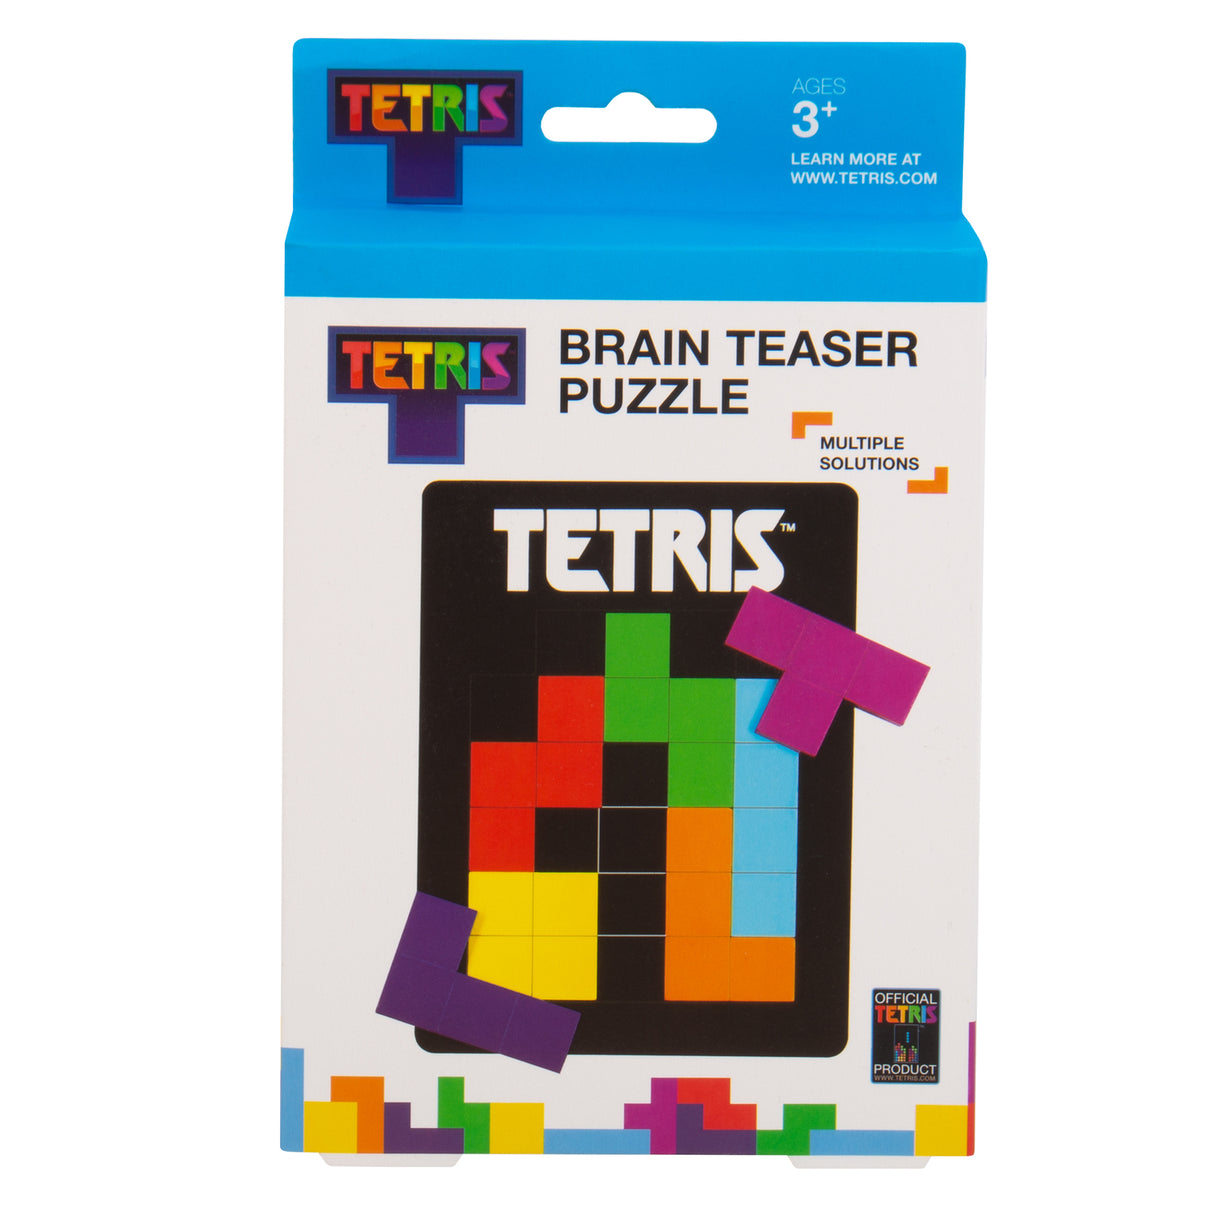 Tetris Denksportaufgabe Puzzle aus Holz